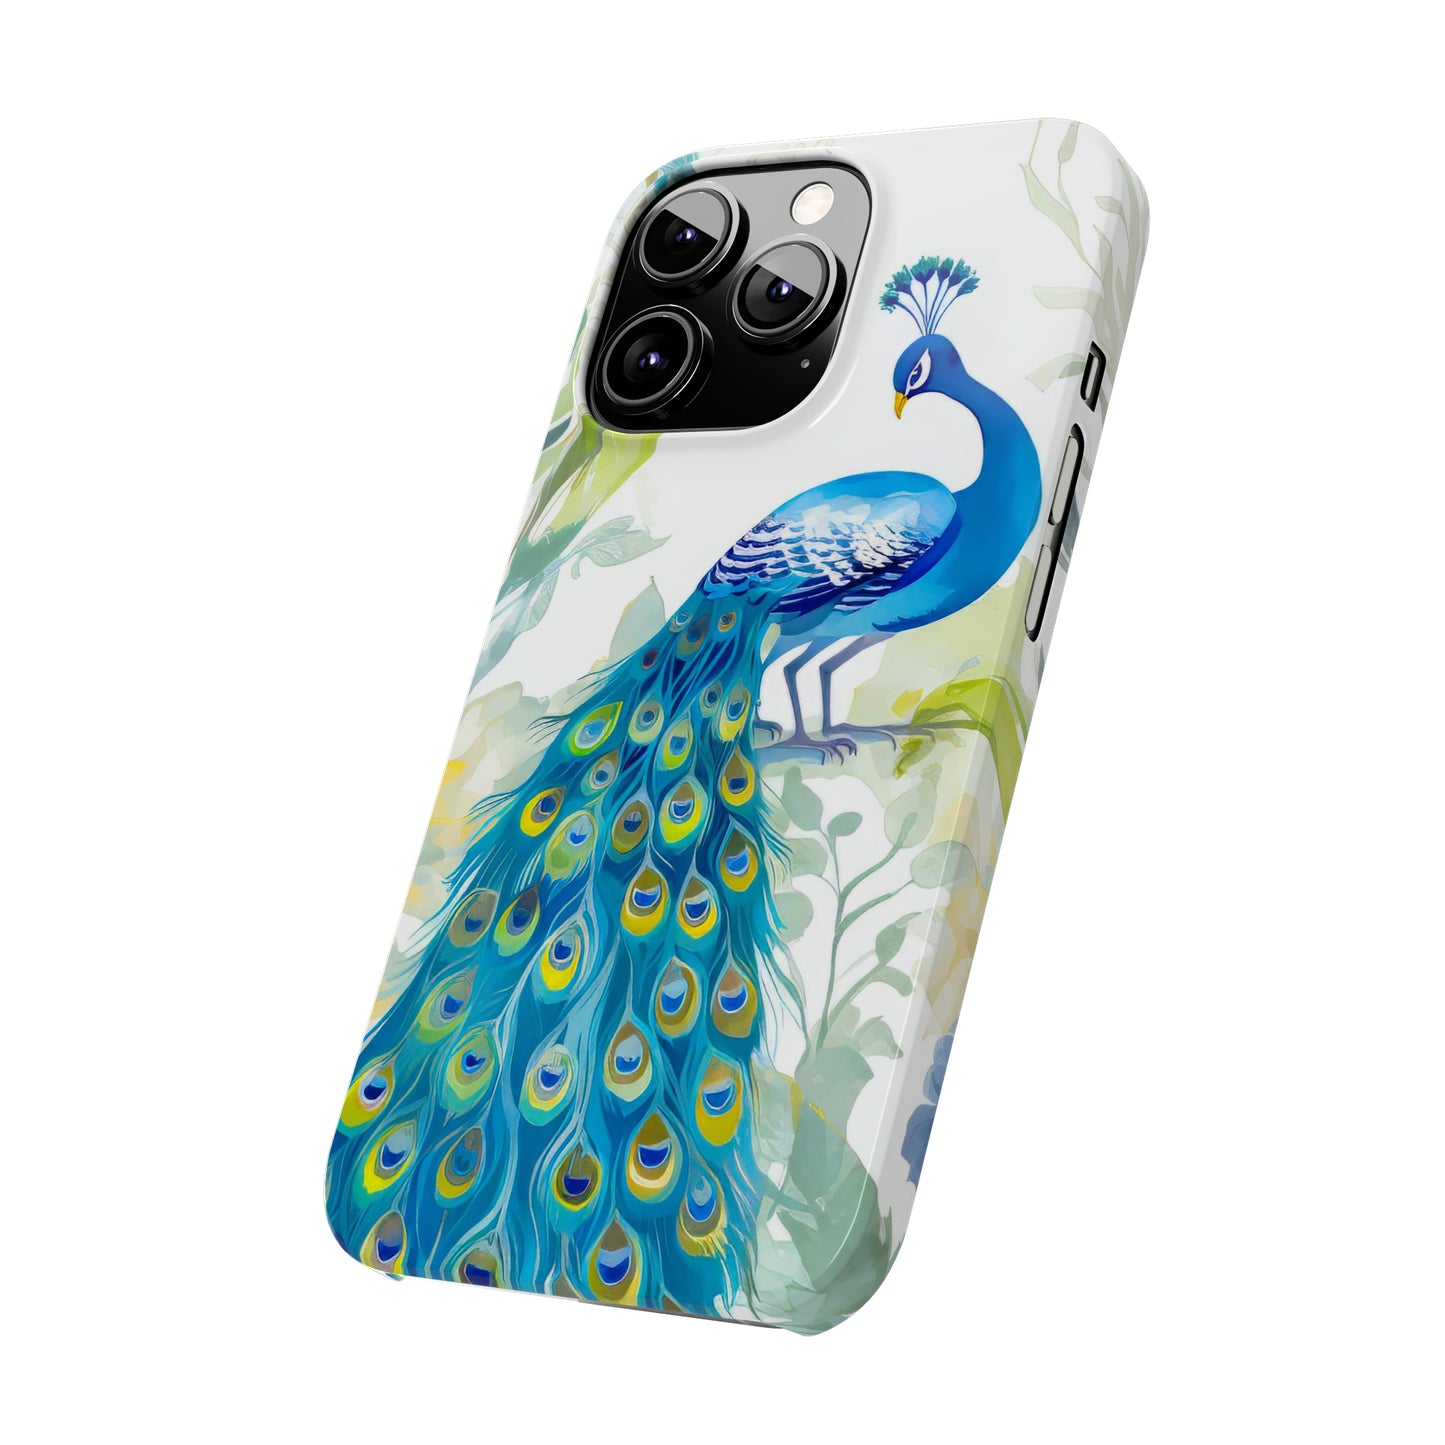 Majestic Peacock iPhone Case